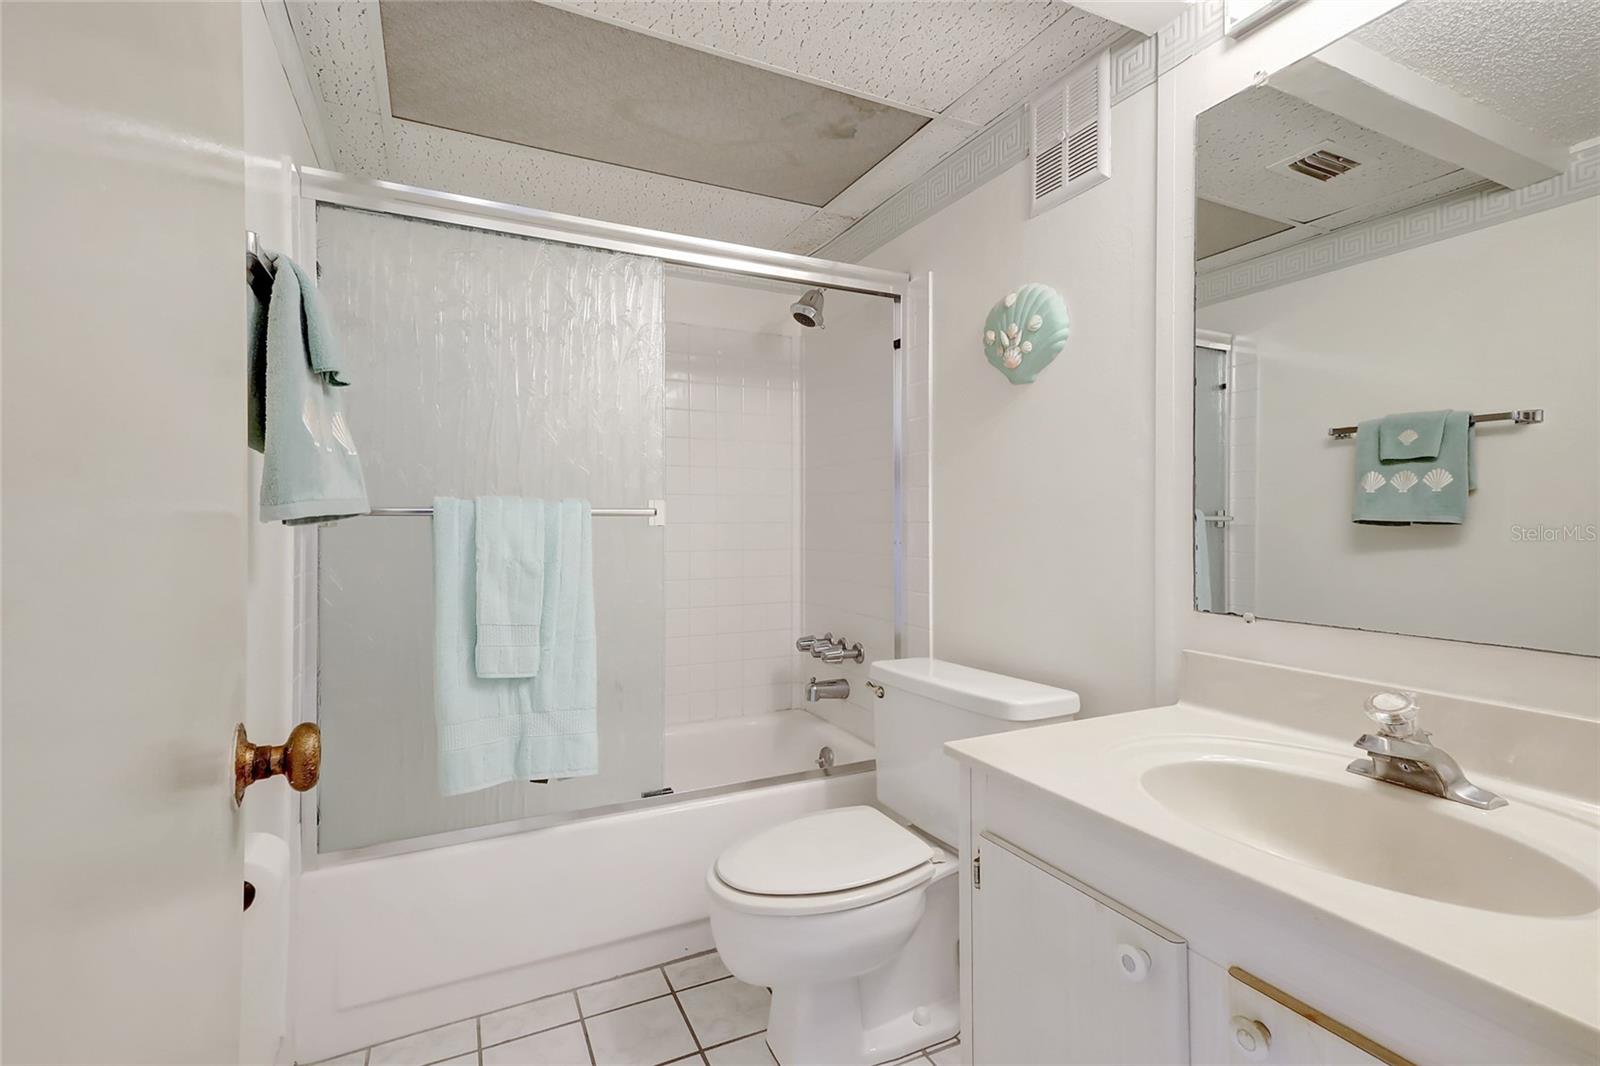 Bathroom 2 has a shower/tub combo.